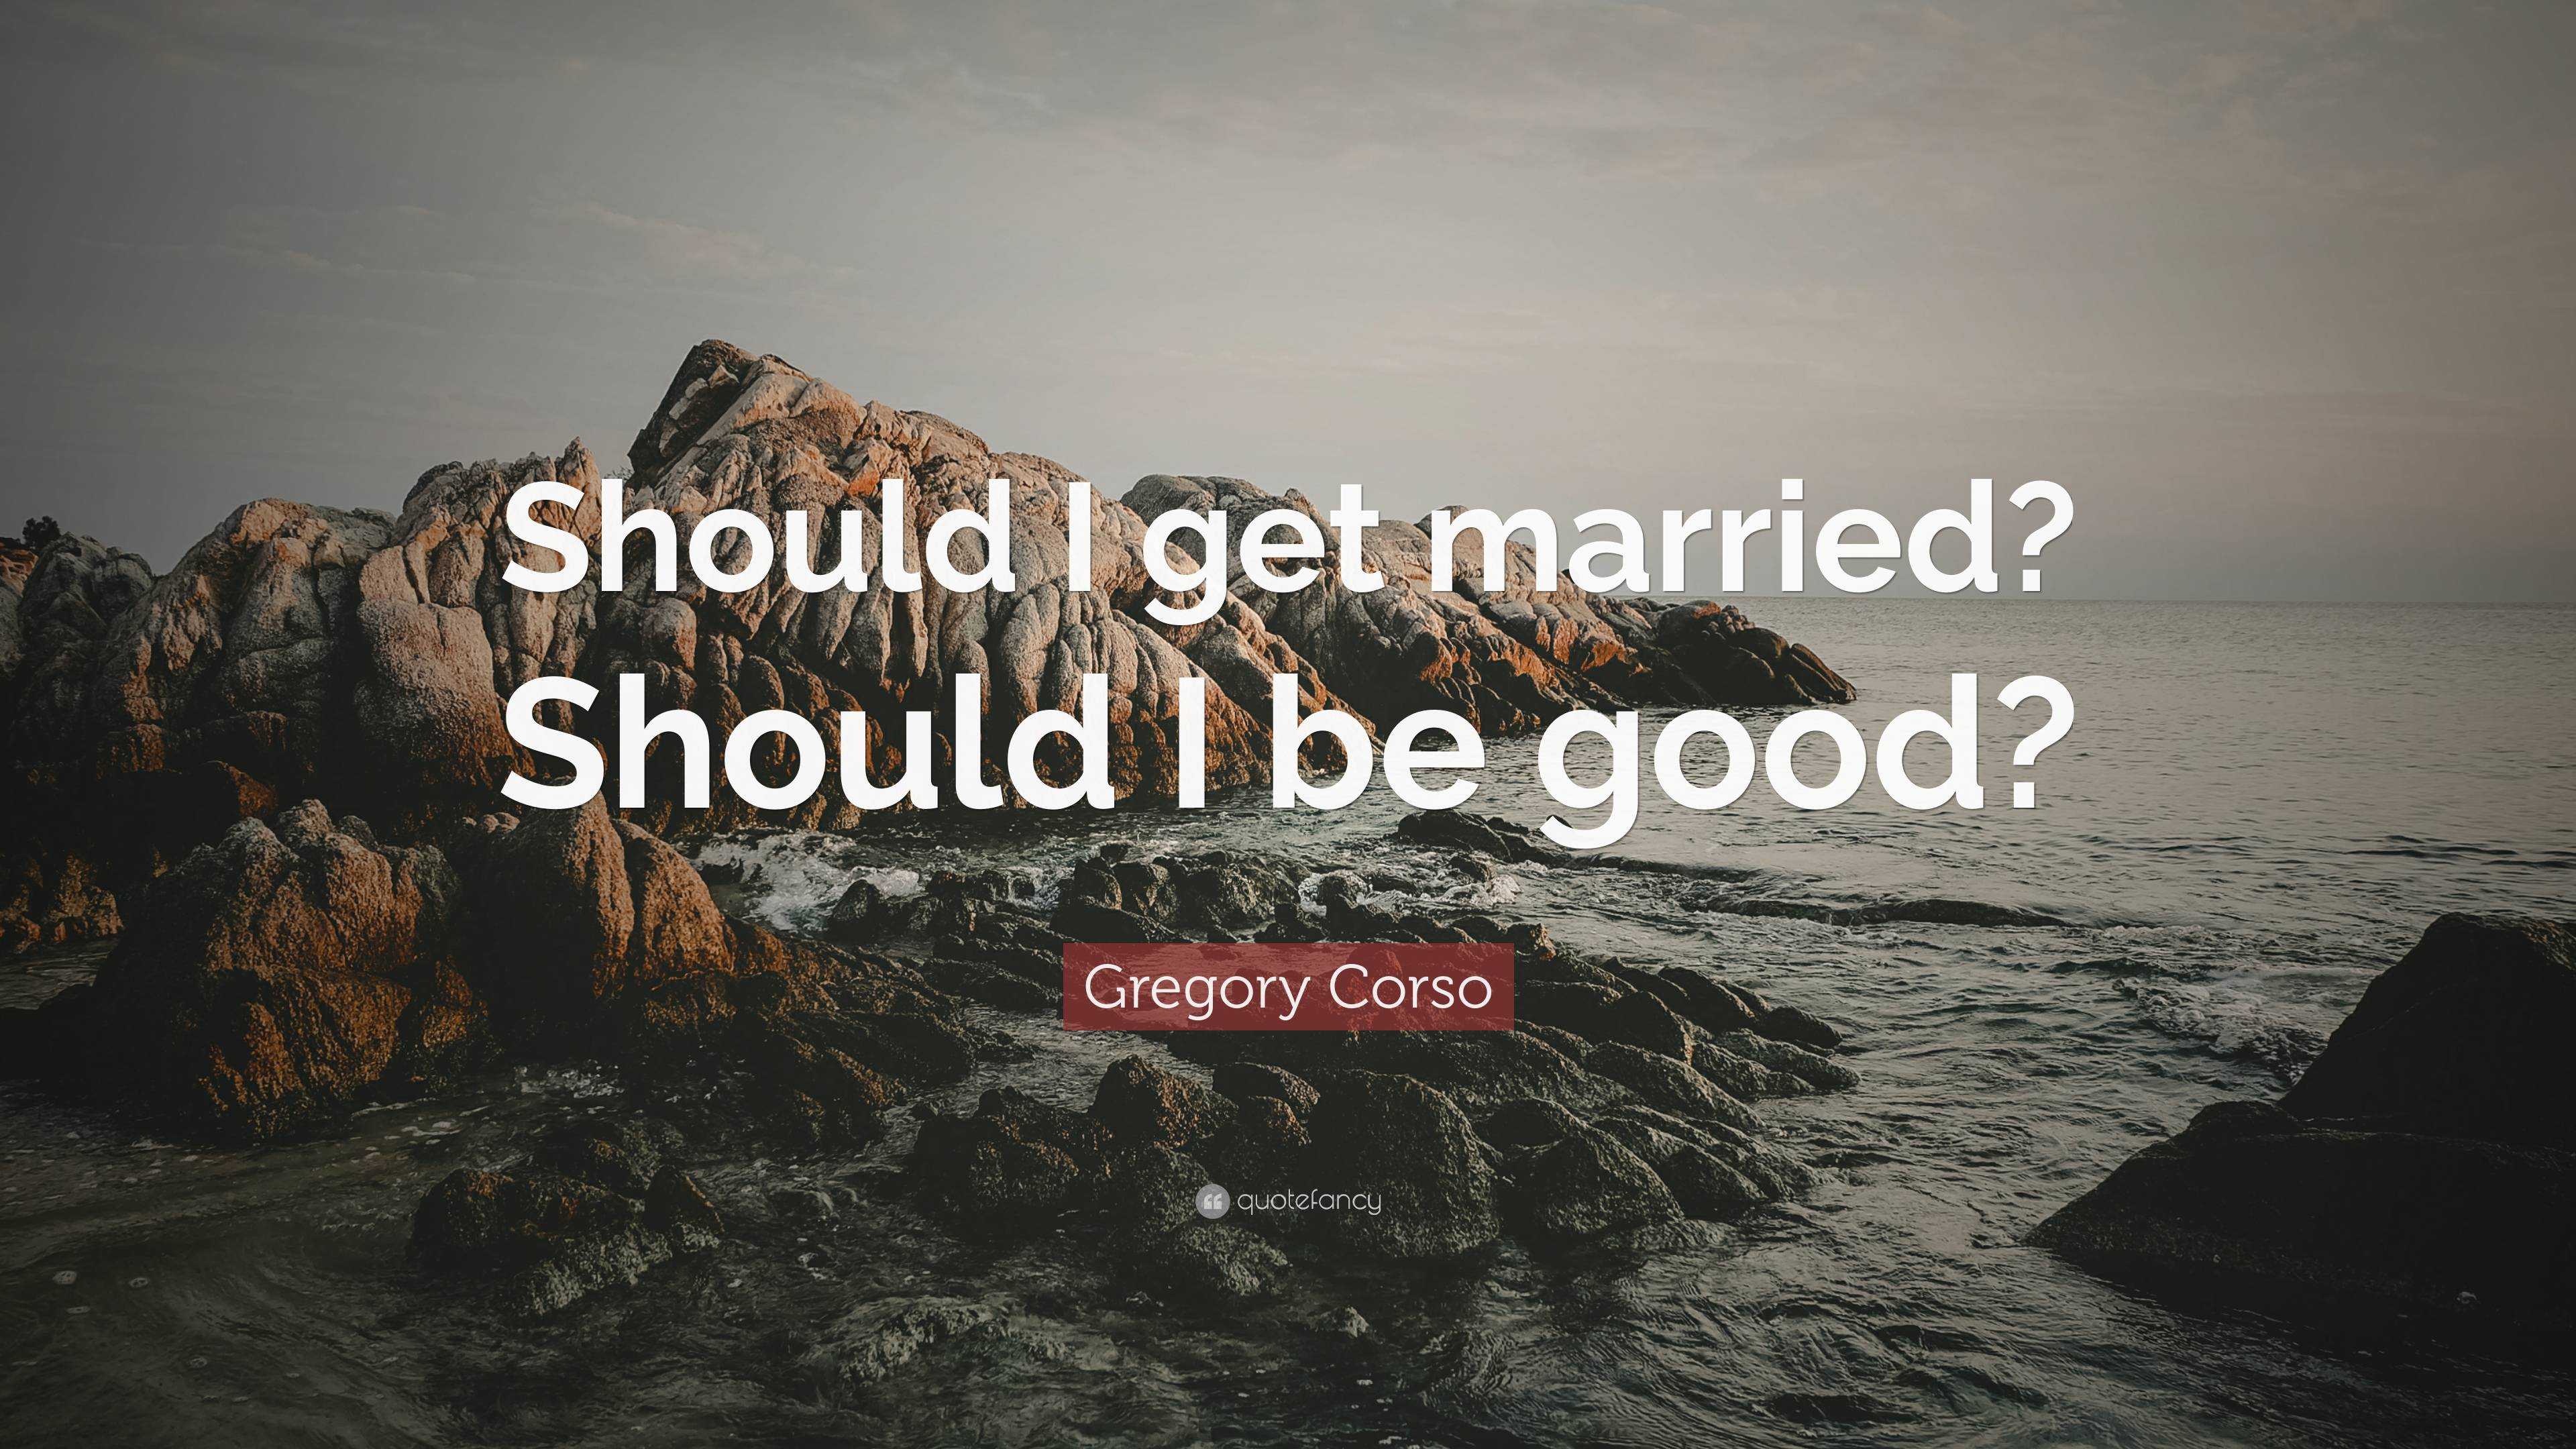 gregory corso marriage